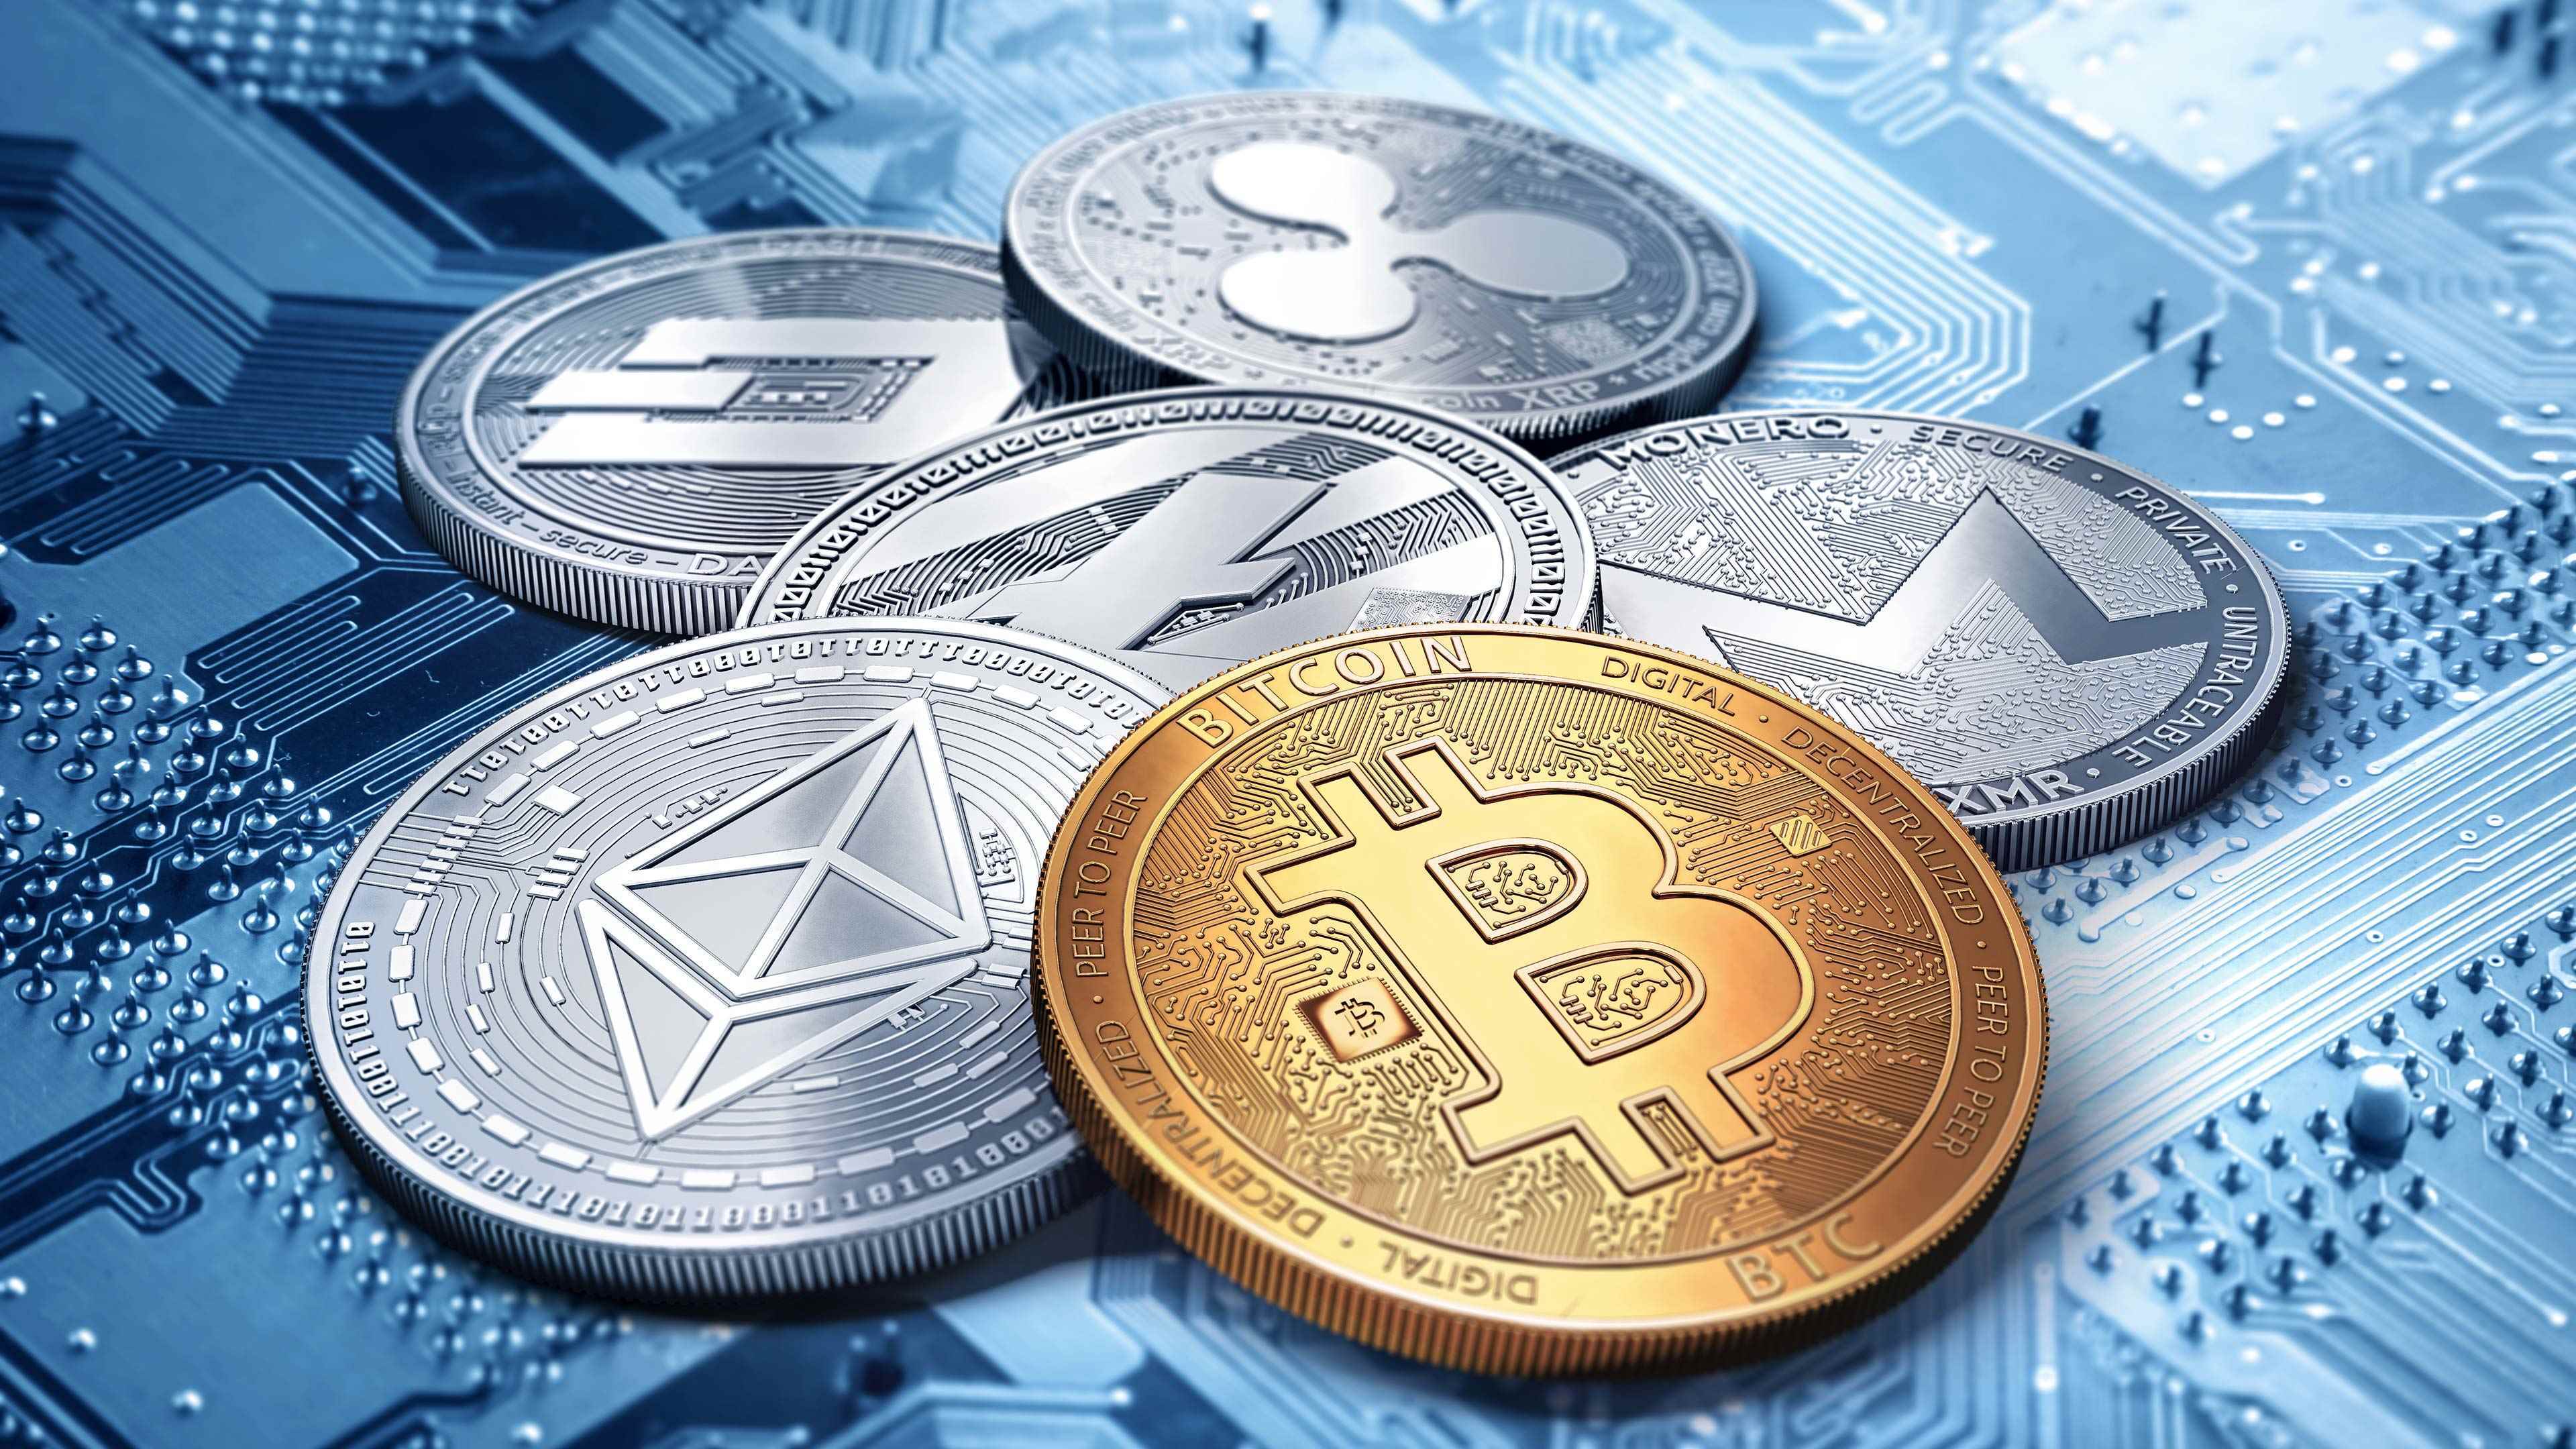 Listelenen en iyi kripto para birimi — Bitcoin, Ethereum, Litecoin, Dogecoin, Binance